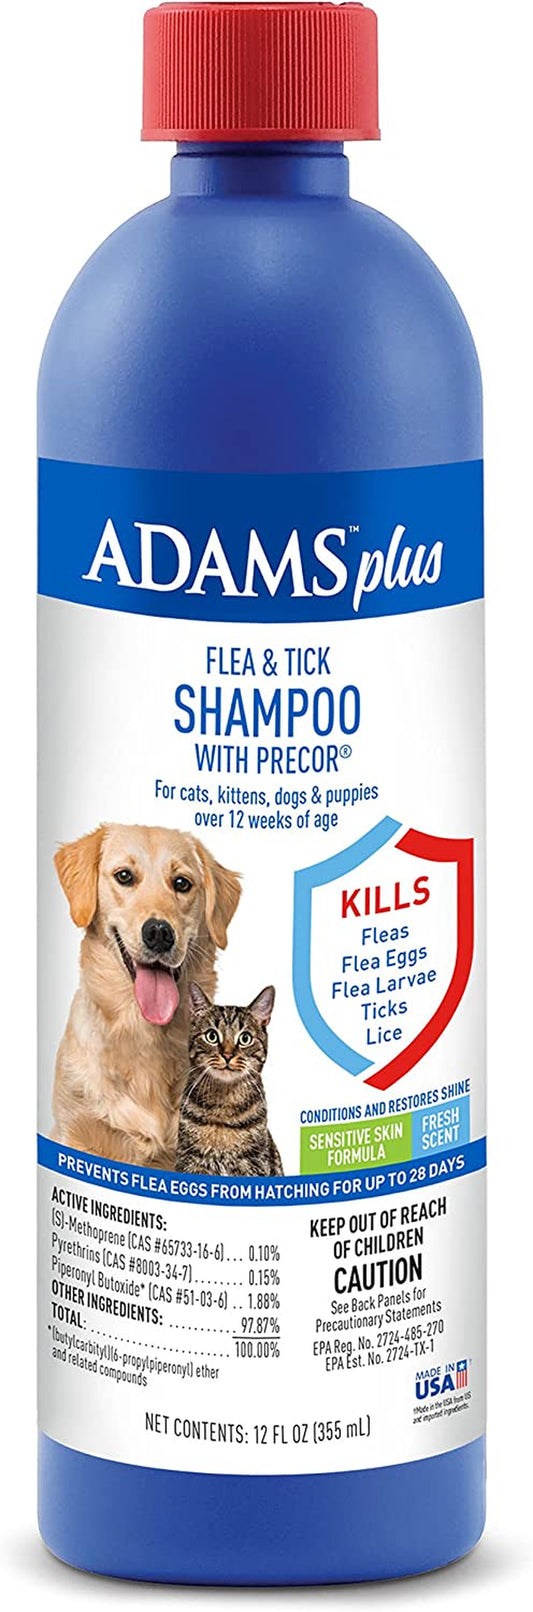 Adams plus Flea & Tick Shampoo with Precor for Cats, Kittens, Dogs & Puppies over 12 Weeks of Age Sensitive Skin Flea Treatment | Kills Adult Fleas, Flea Eggs, Ticks, and Lice| 12 Ounces